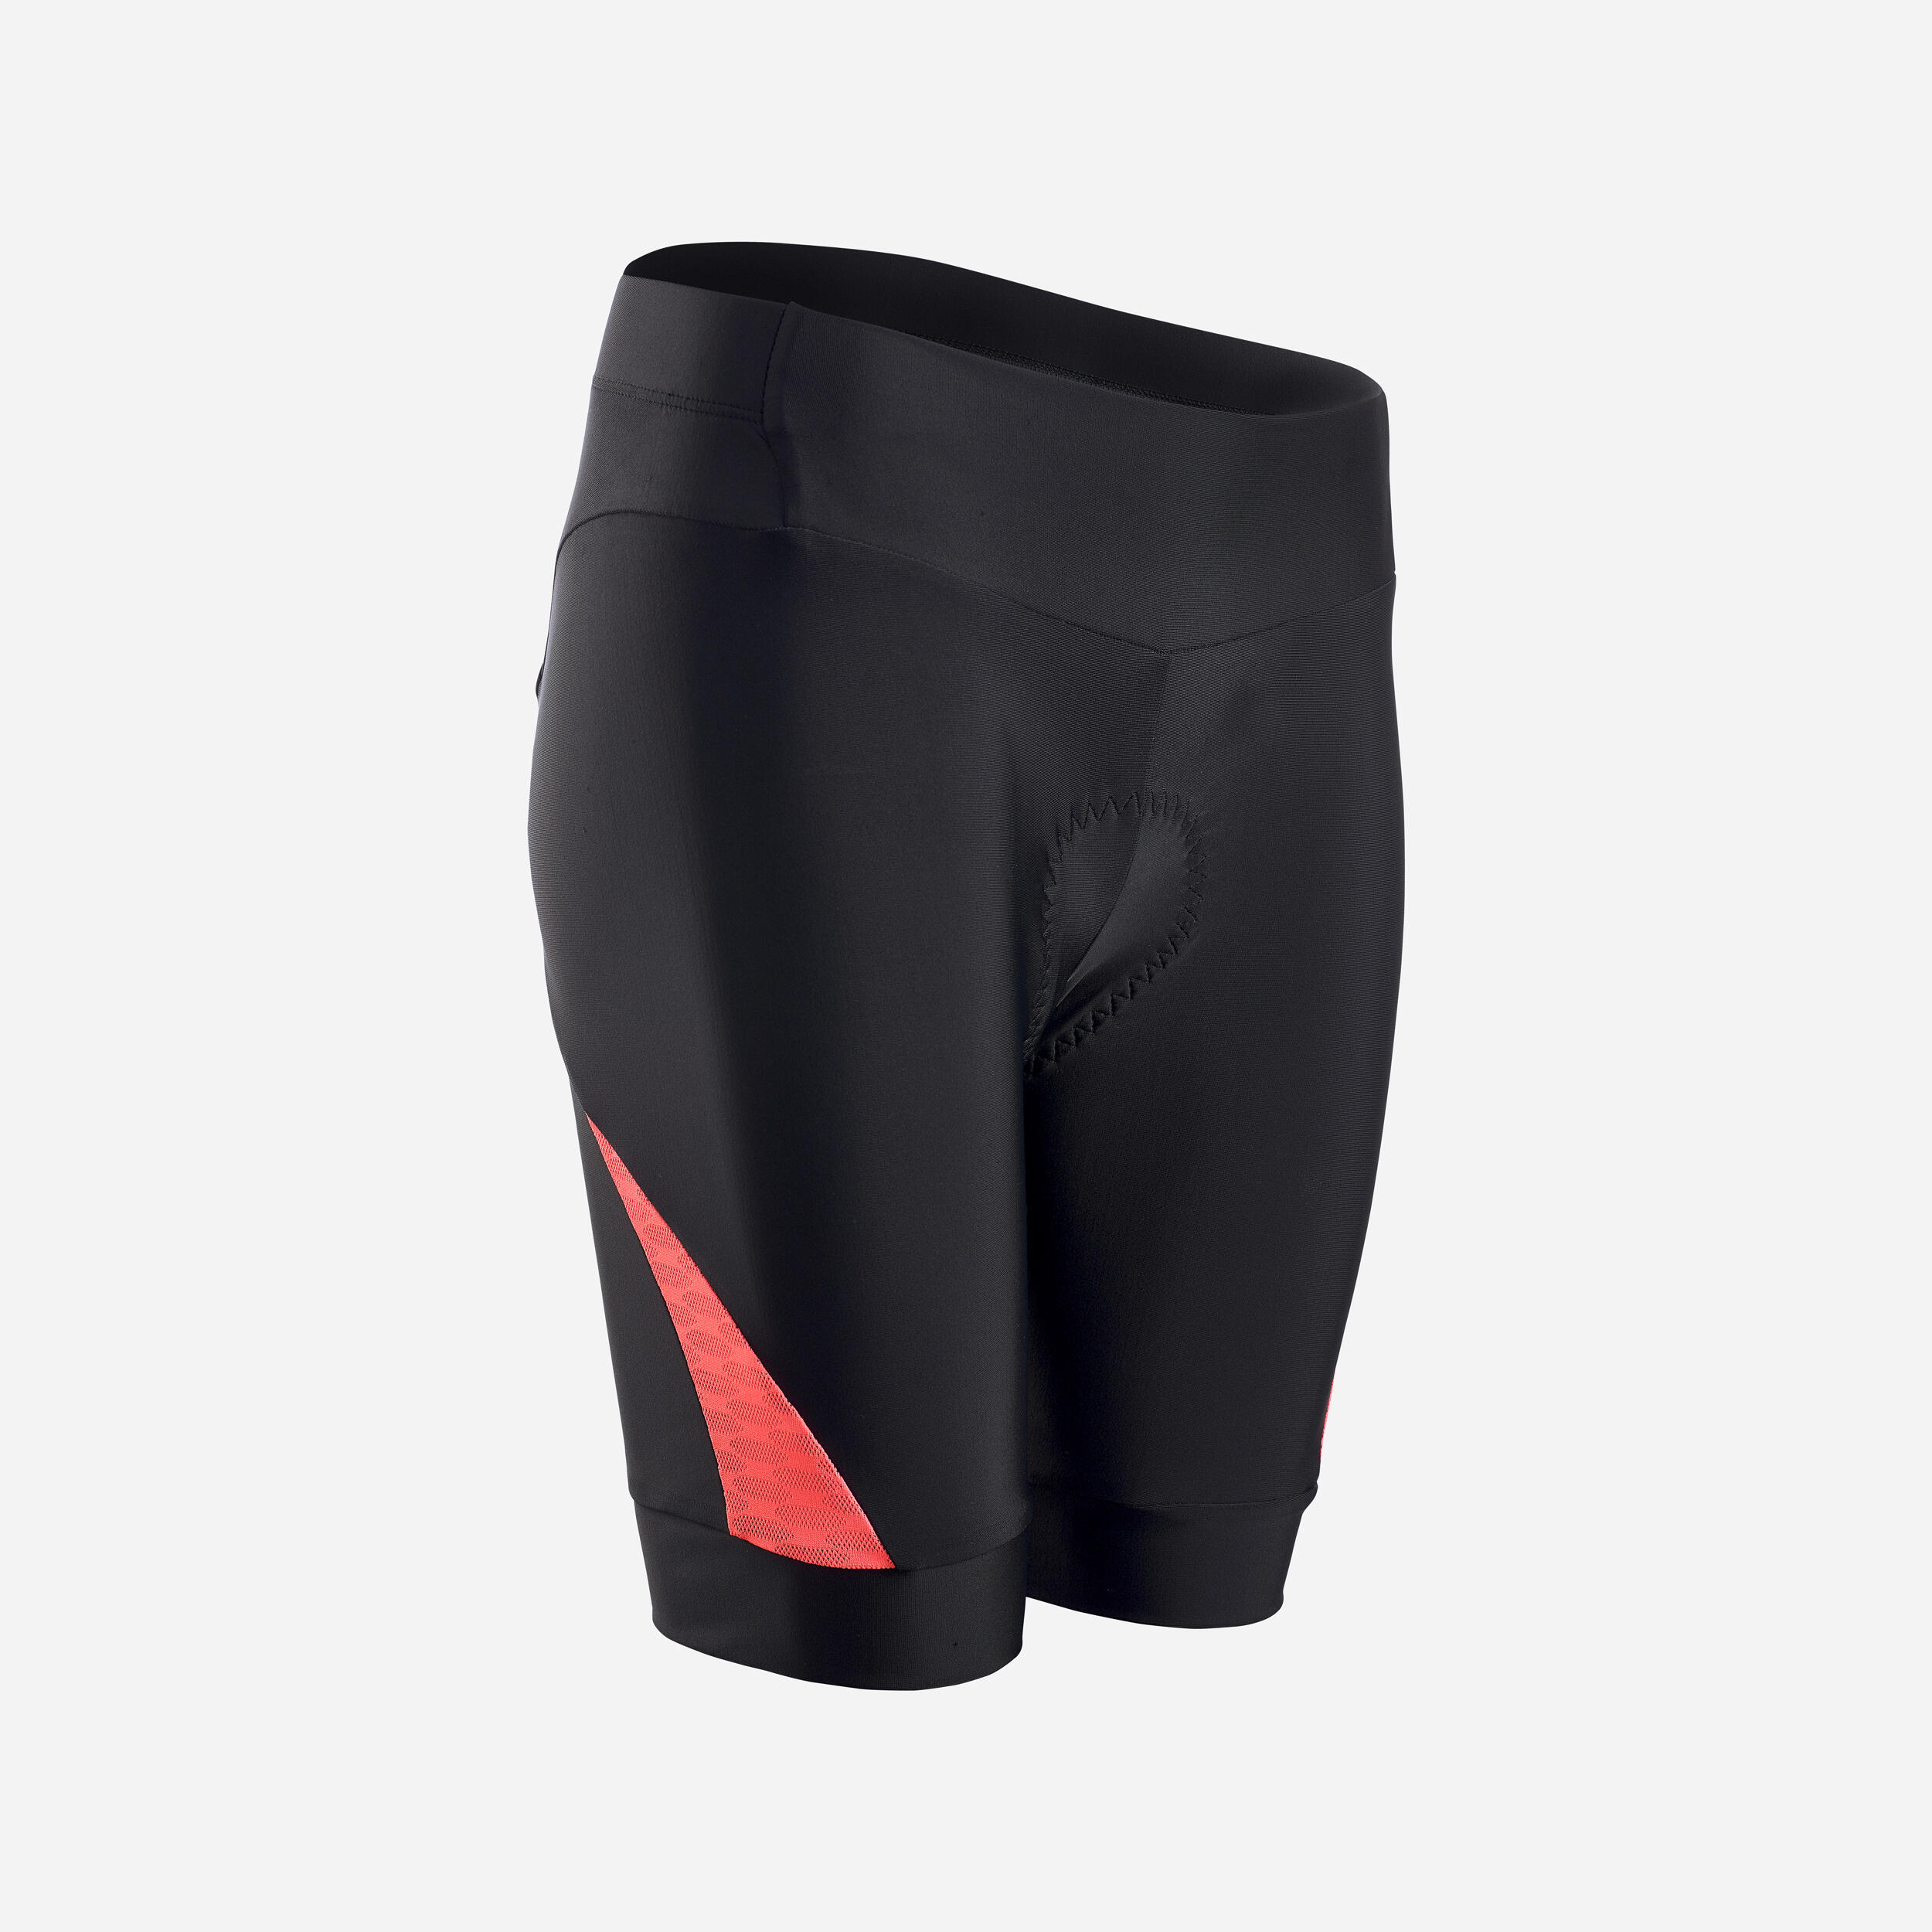 RC 100 cycling shorts - Men - Black, Black - Van rysel - Decathlon